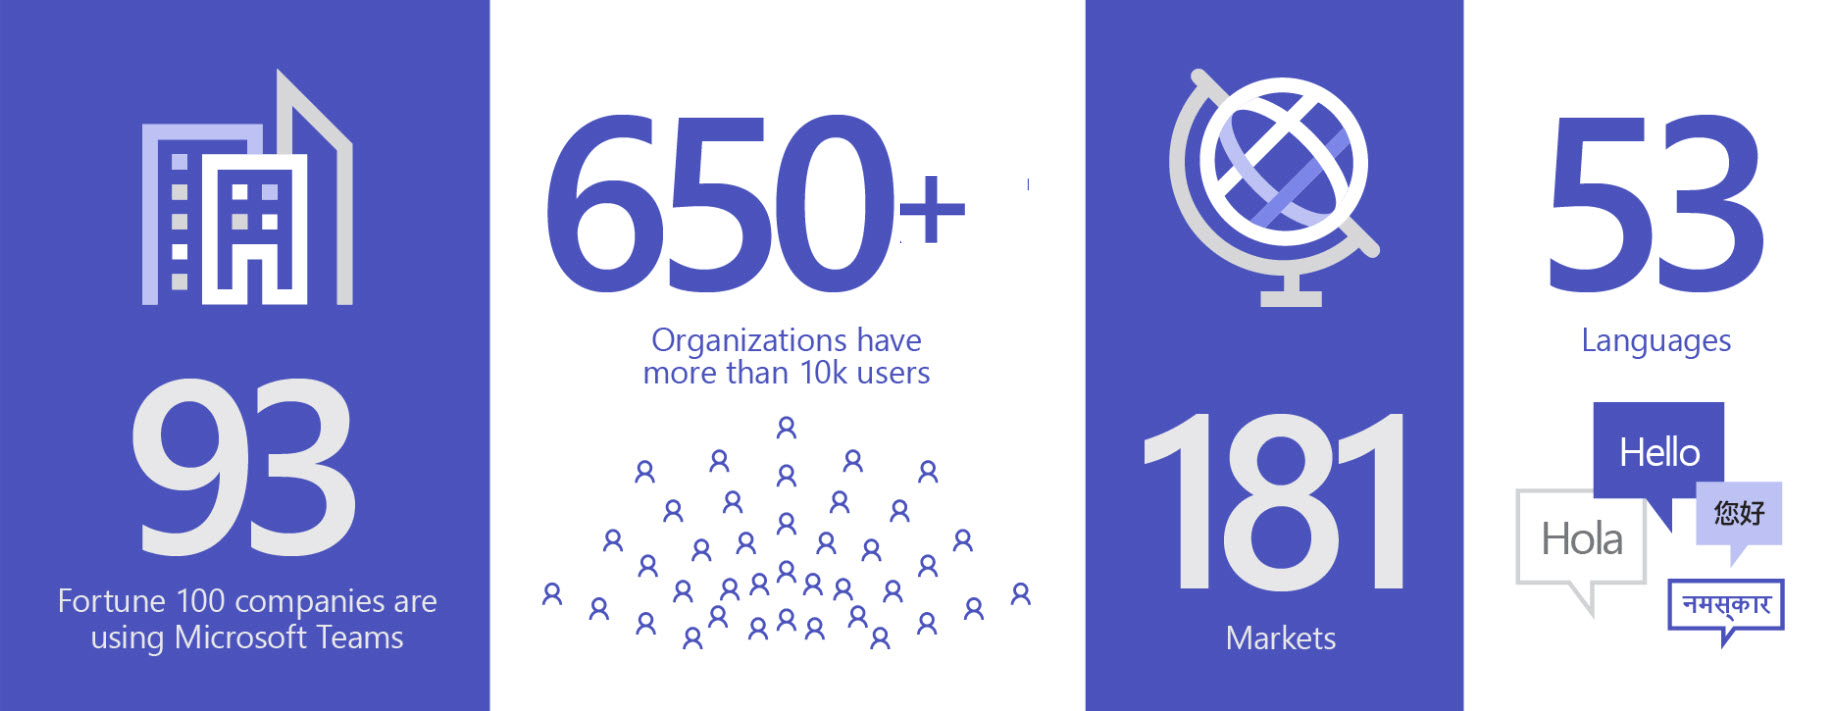 Teams를 사용하는 93개 조직을 보여 주는 이미지. 사용자 수가 1만 명이 넘는 조직이 181개 시장, 53개 언어에 걸쳐 650개 이상입니다.